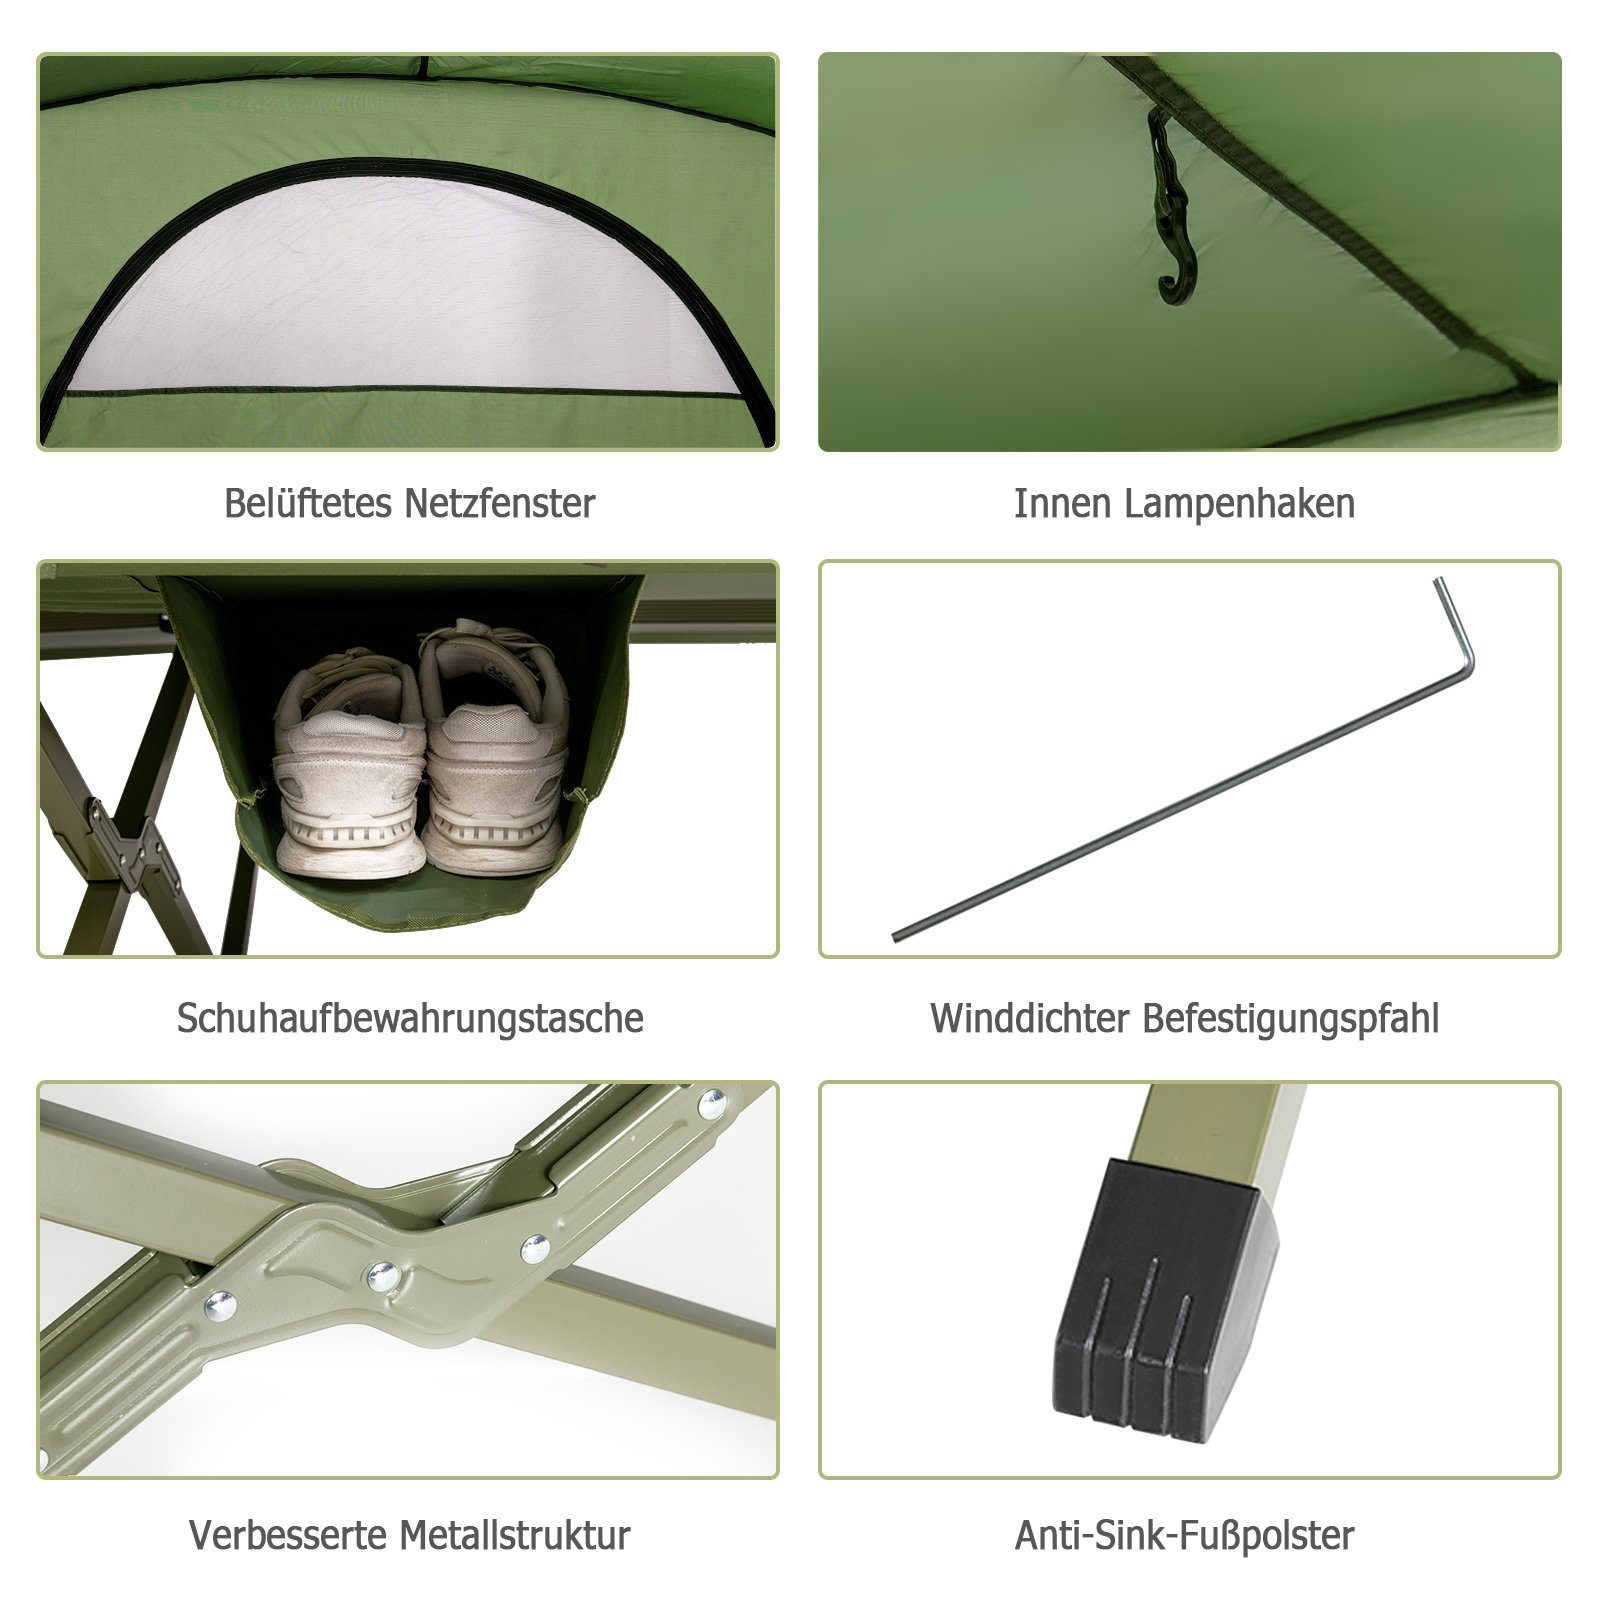 Campingzelt, grün COSTWAY Kuppelzelt mit Personen: Tasche 2,